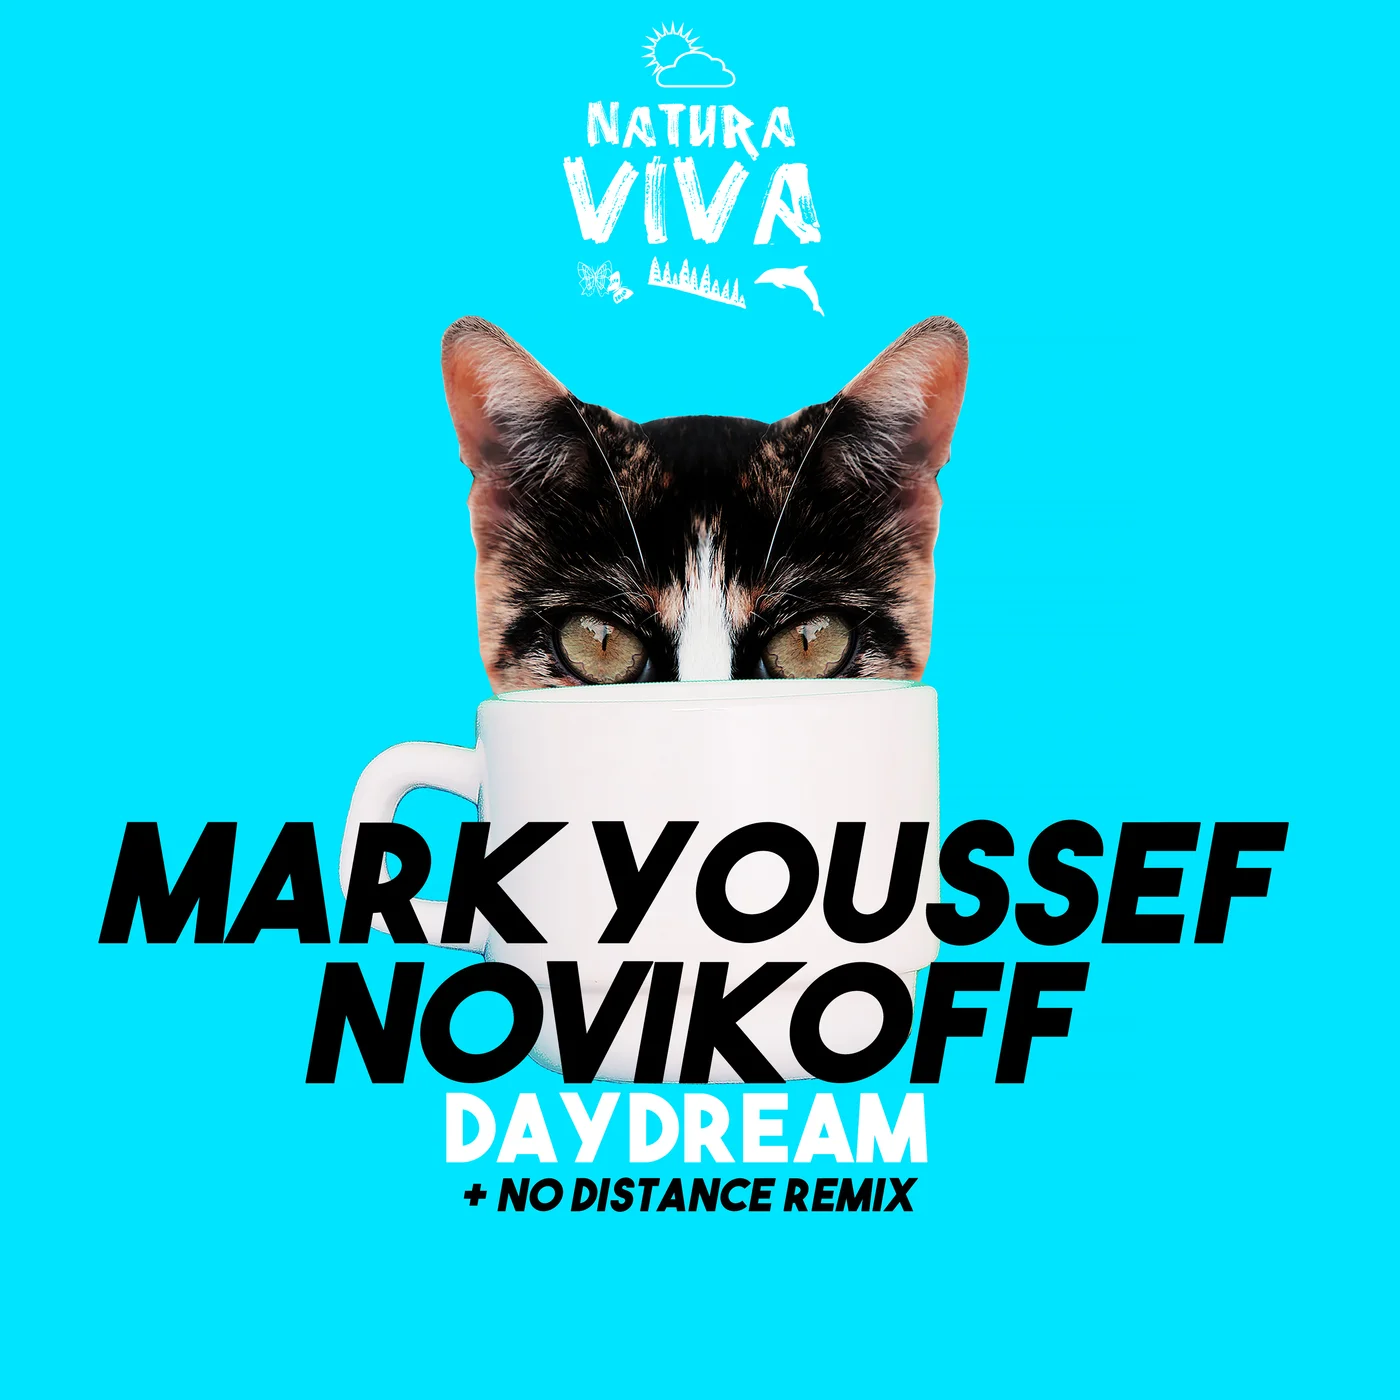 Novikoff, Mark Youssef - Insight (No Distance Remix)